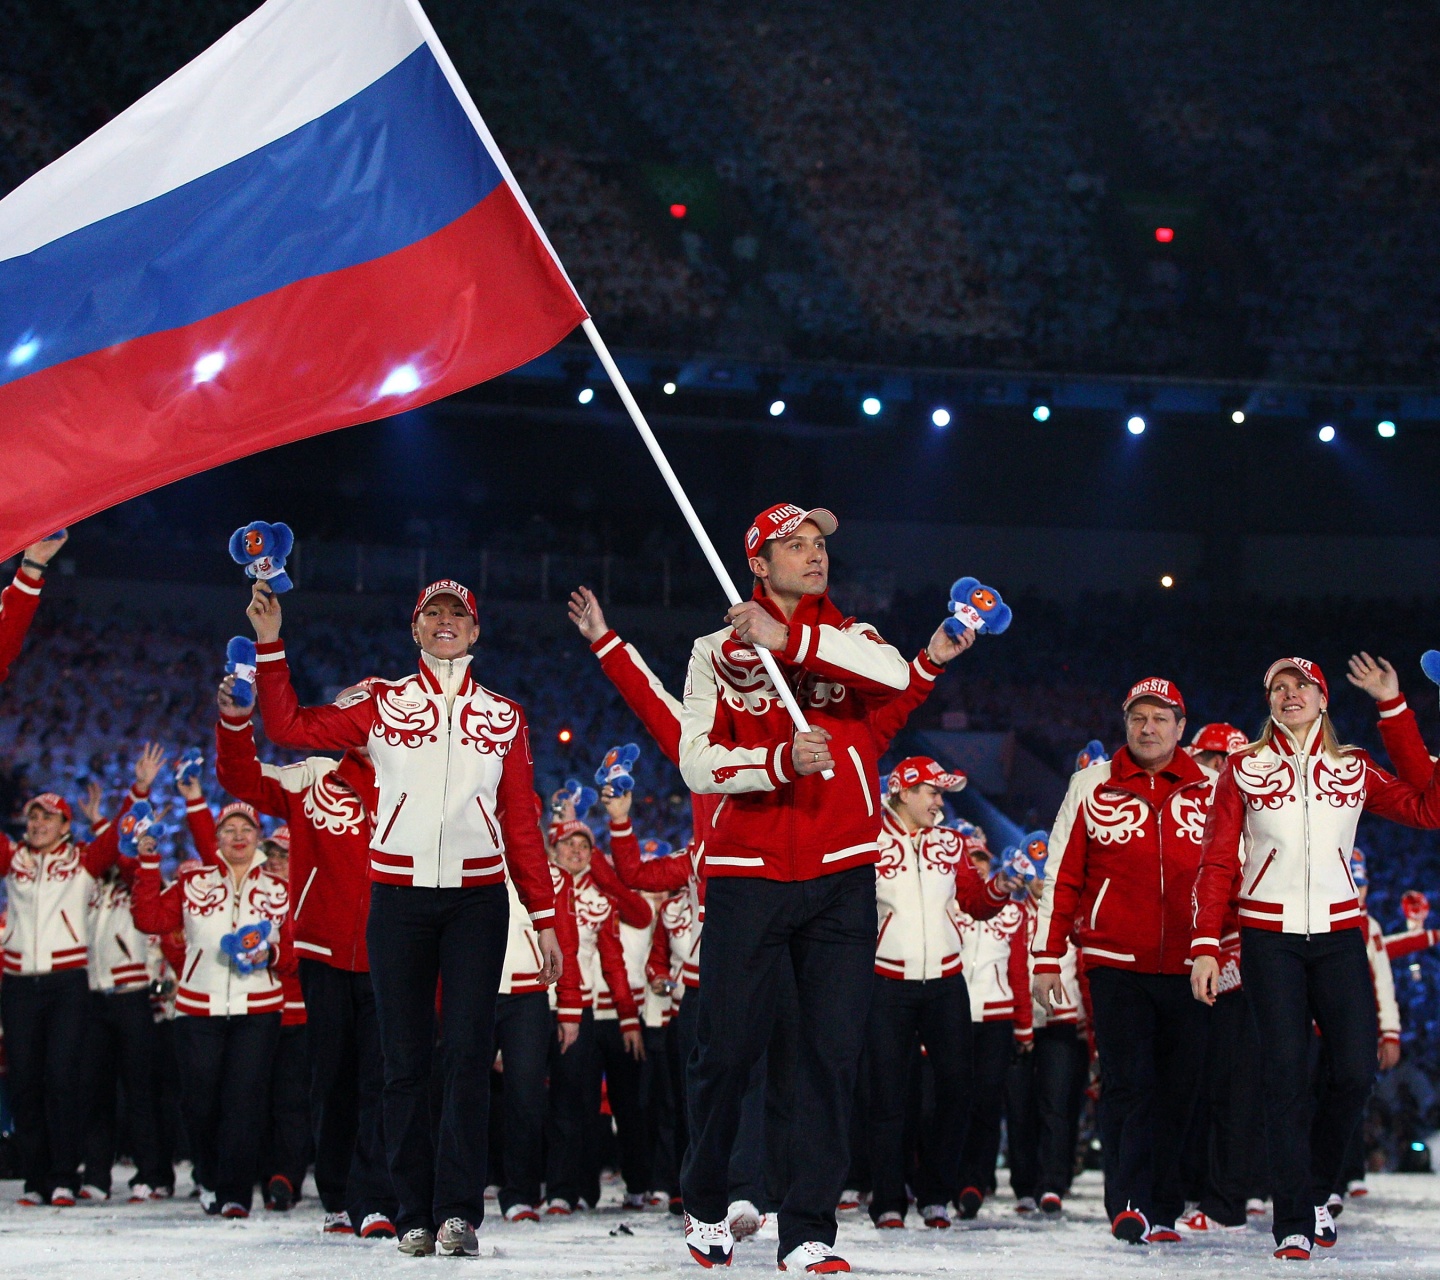 Rusia Winter Olympic Team Sochi 2014